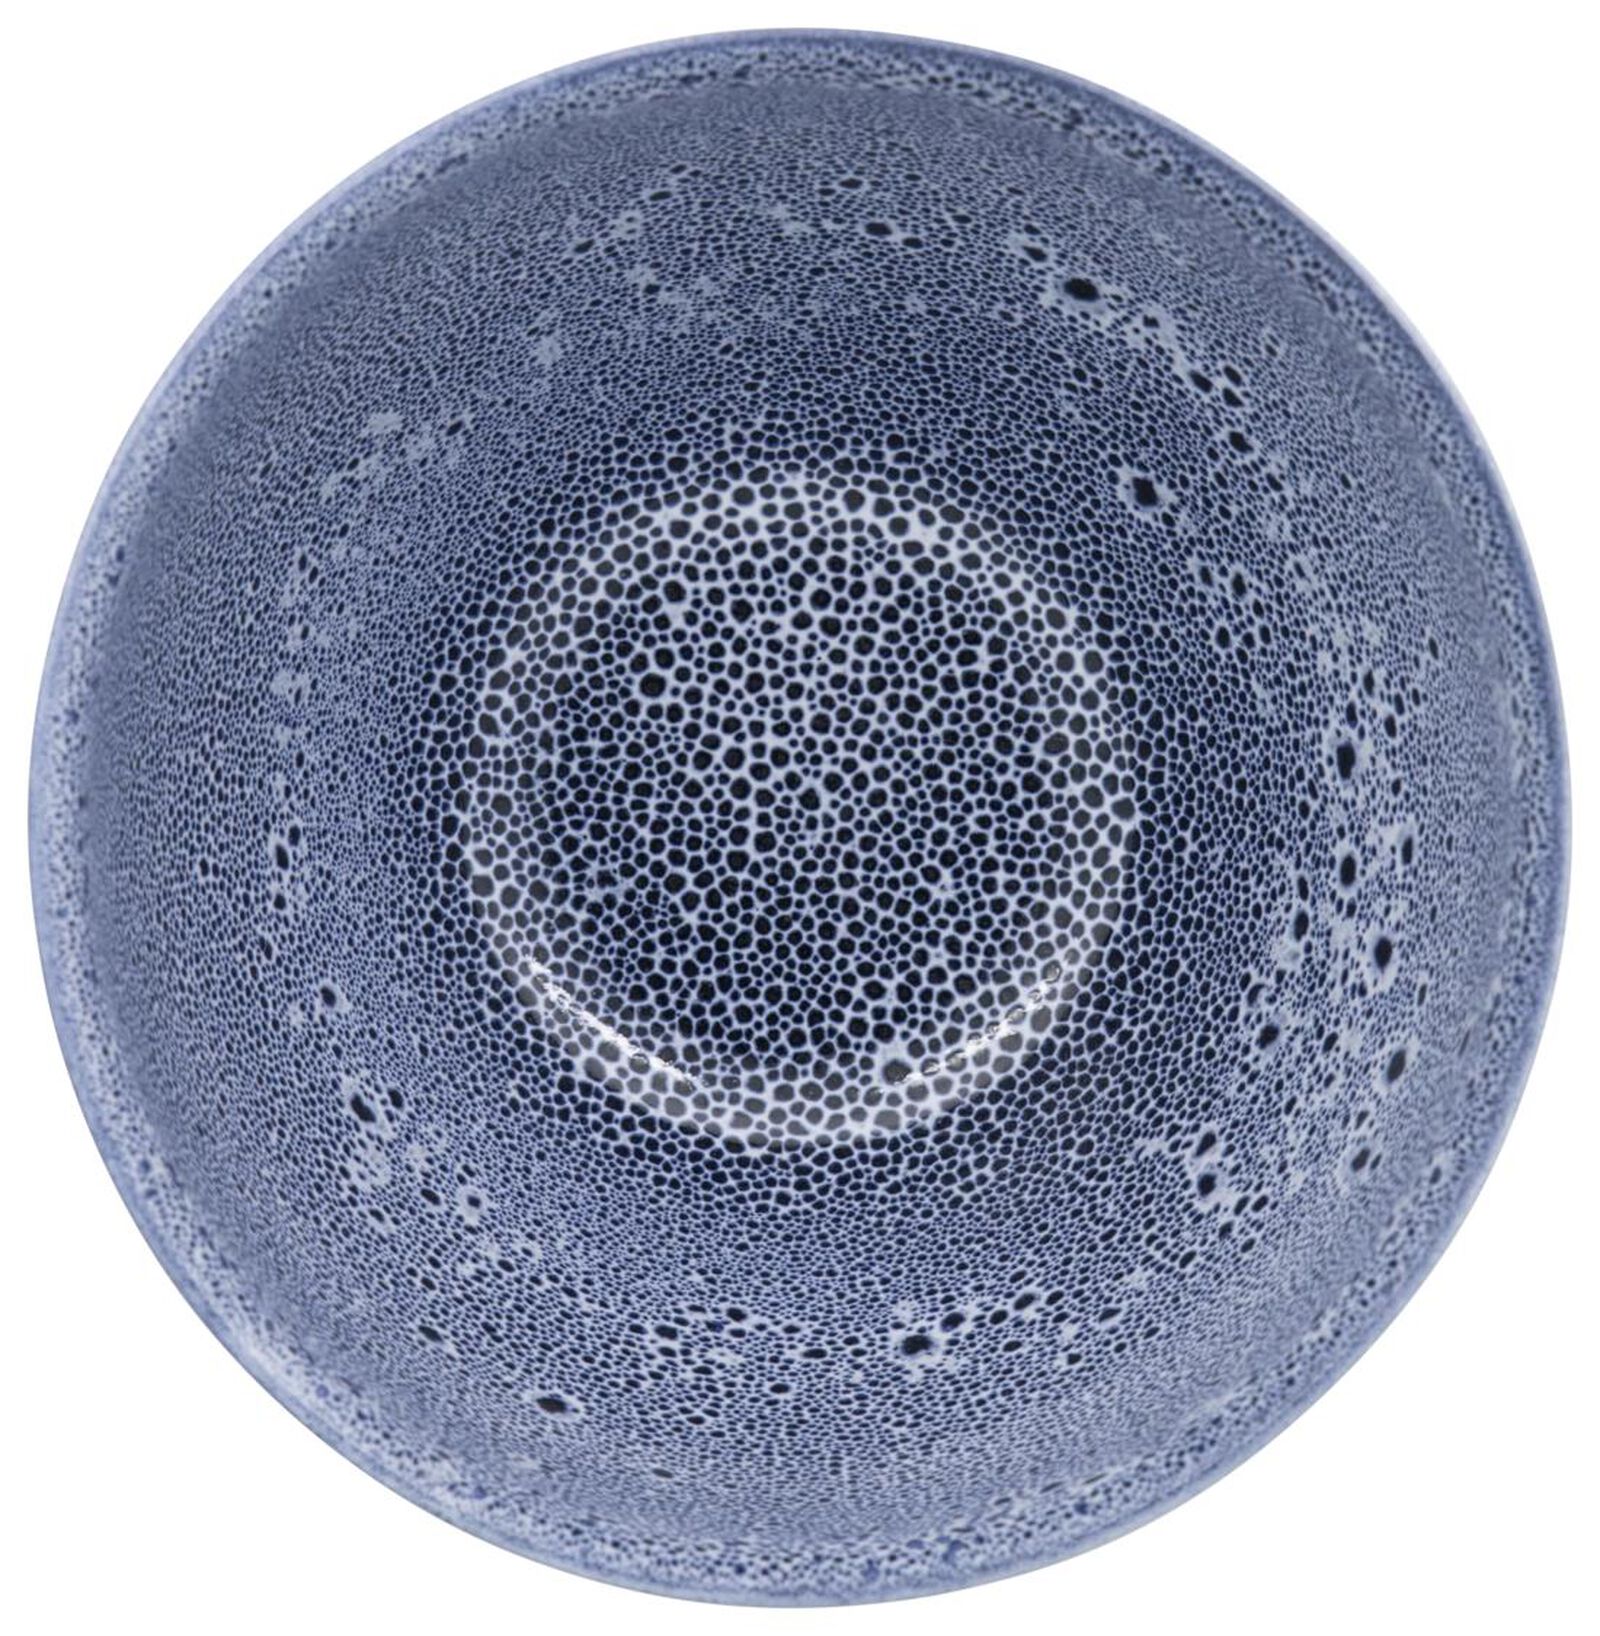 Schale Porto, 14.5 cm, reaktive Glasur, weiß/blau - 9602254 - HEMA